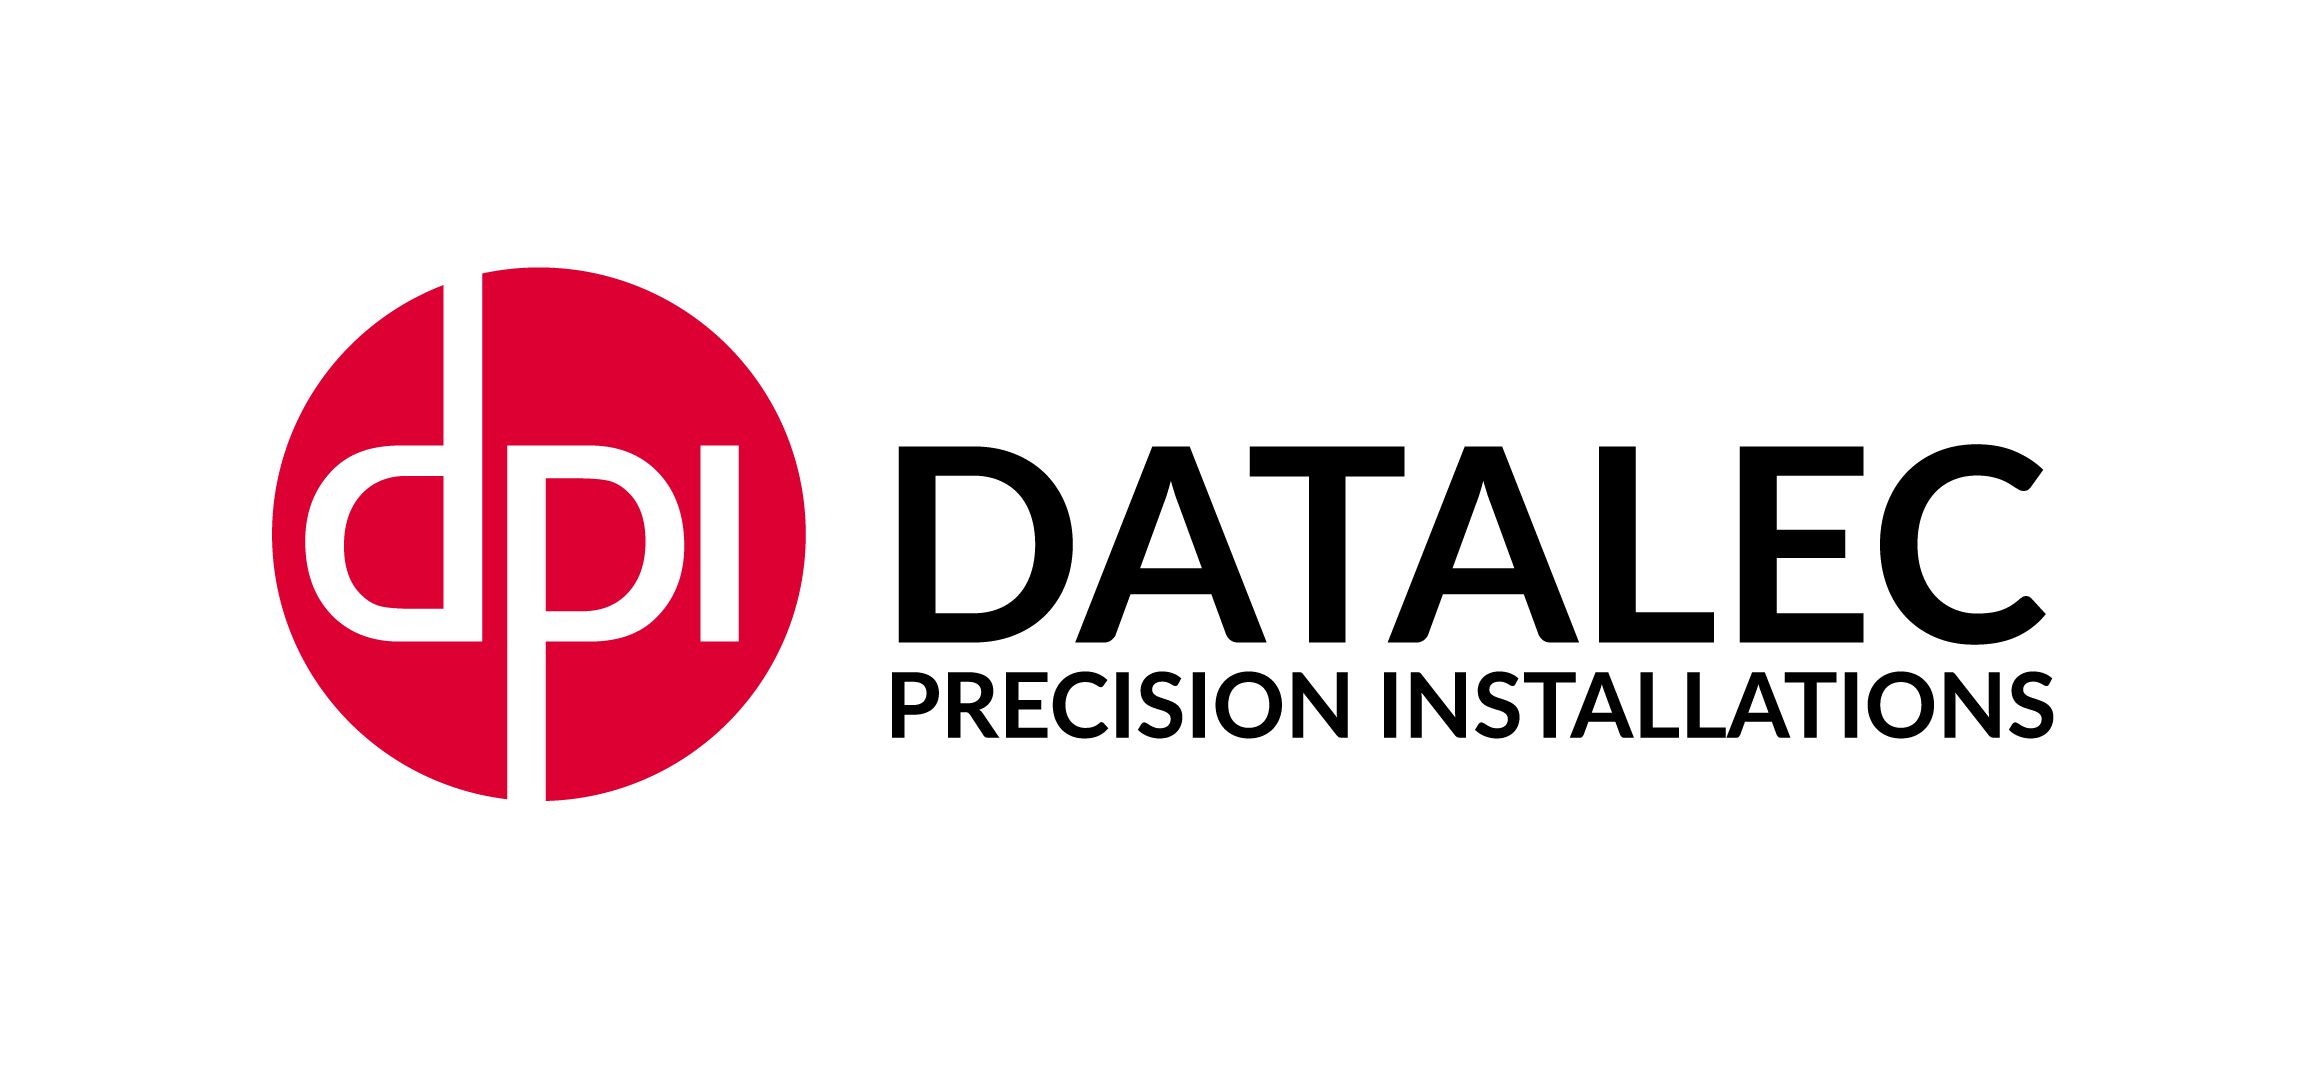 Datalec Precision Installations